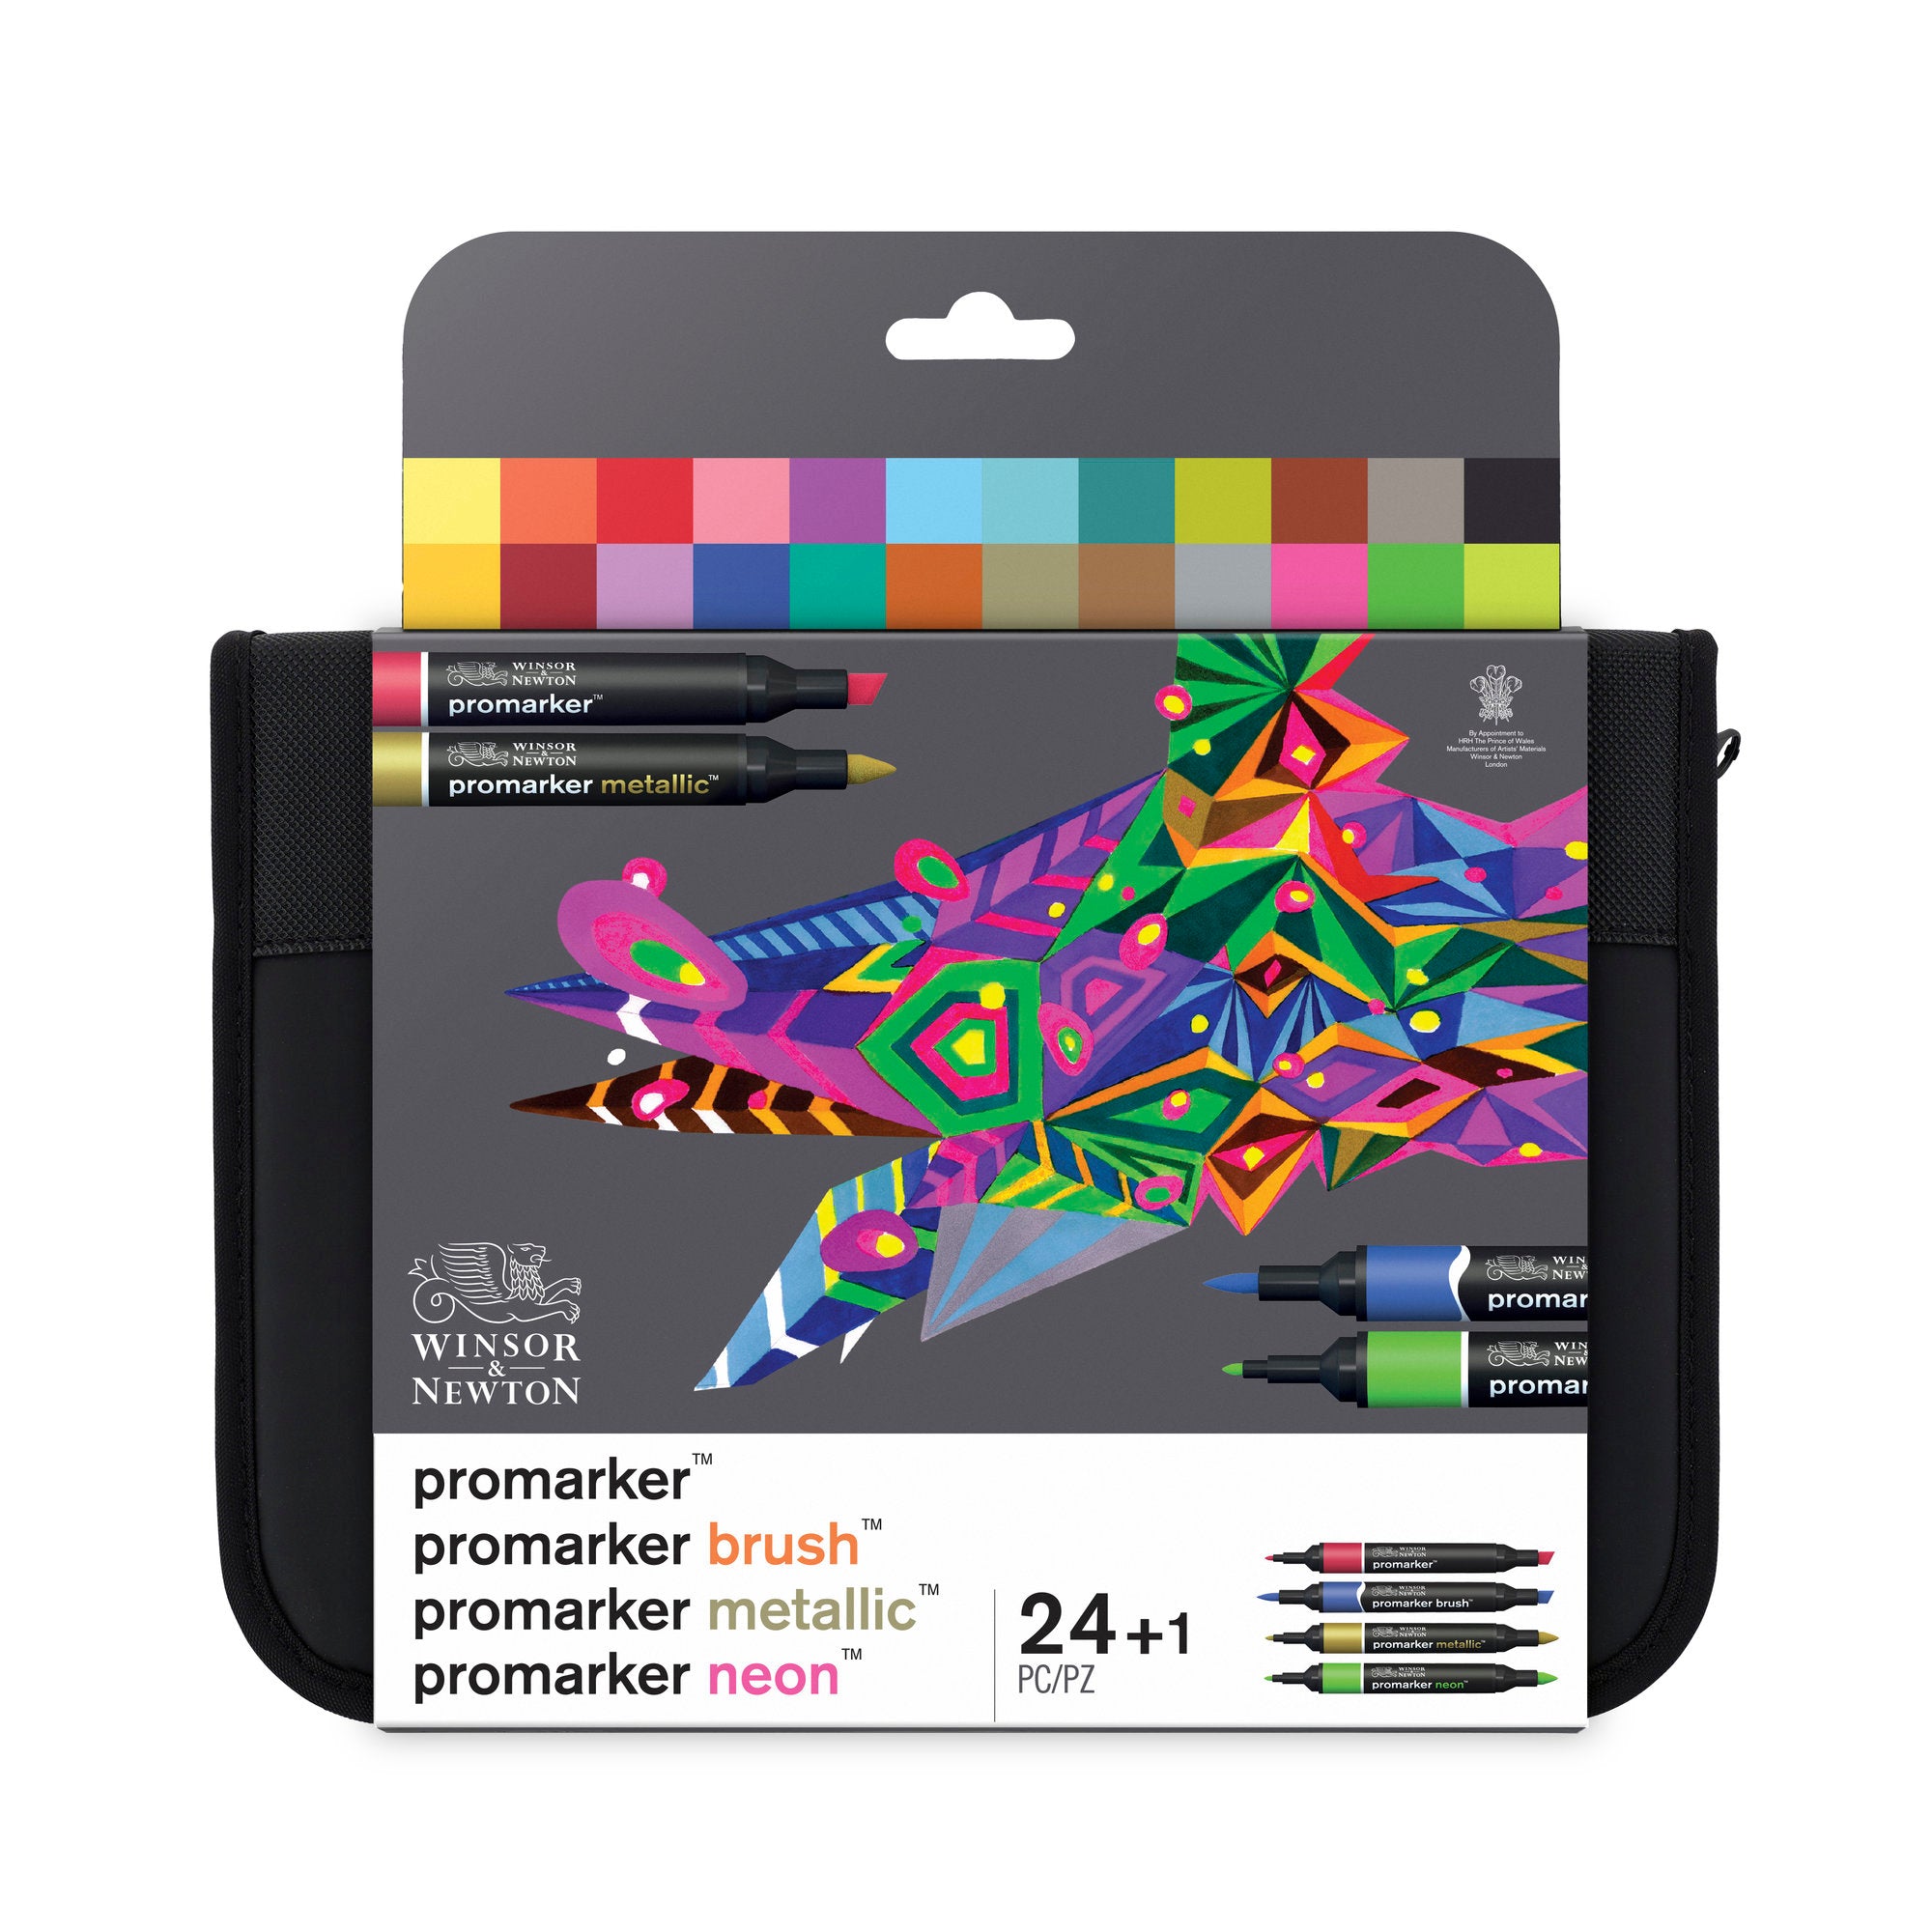 Winsor & Newton Promarker MIXED Marker Set of 24